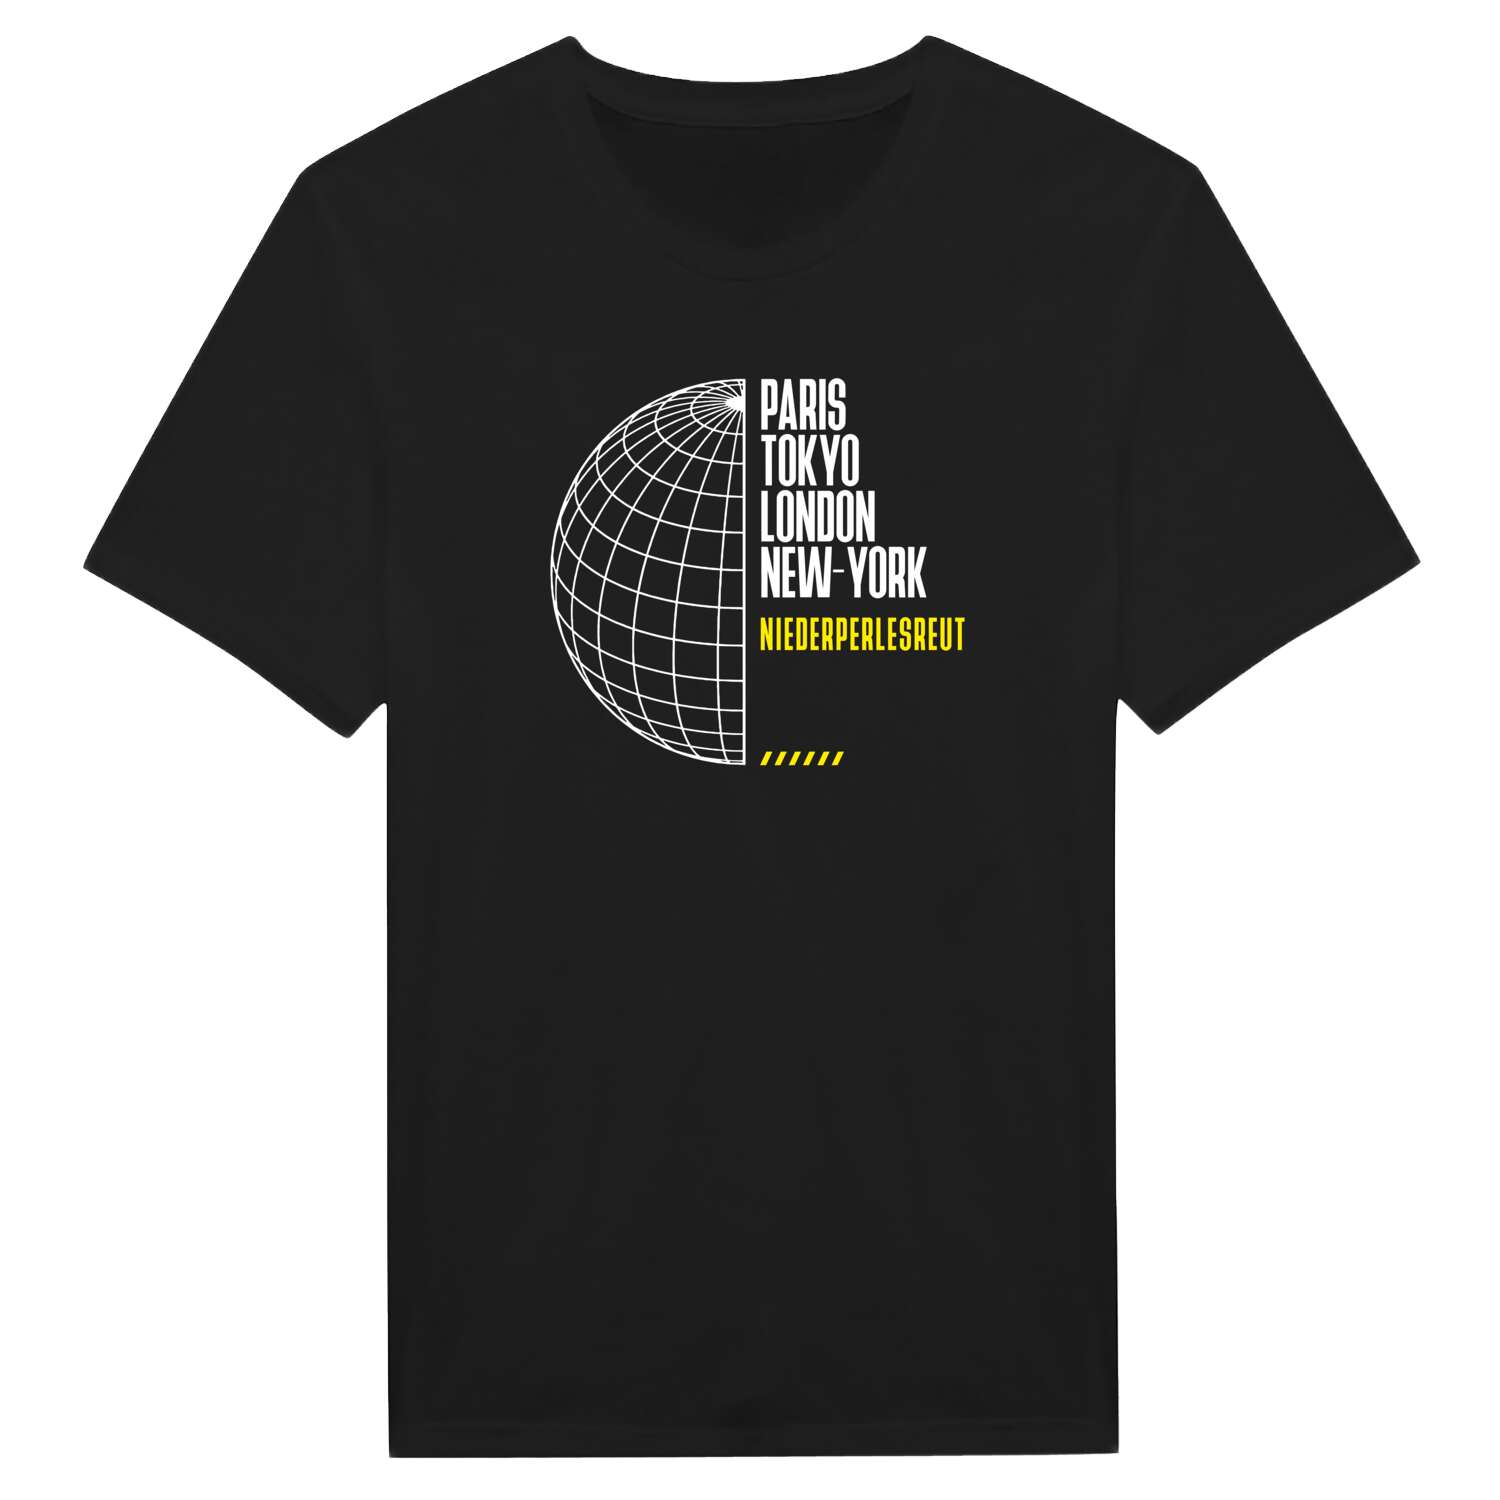 Niederperlesreut T-Shirt »Paris Tokyo London«